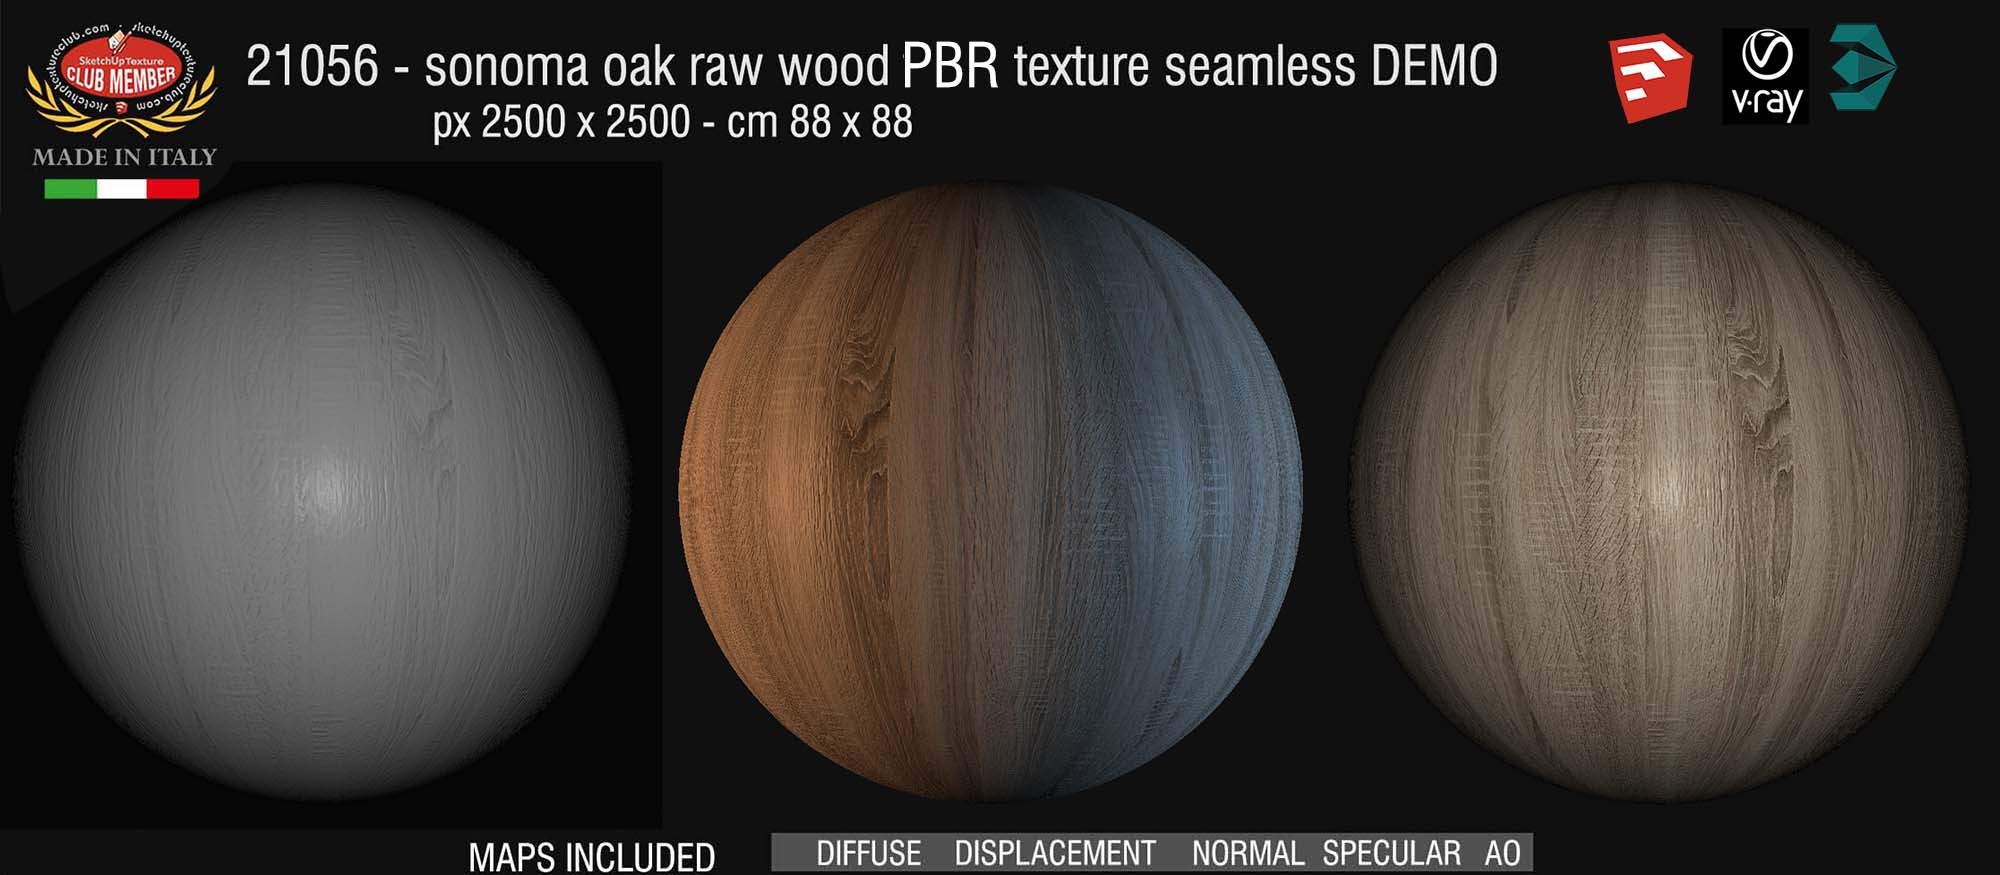 21056 Sonoma oak raw wood PBR texture seamless DEMO